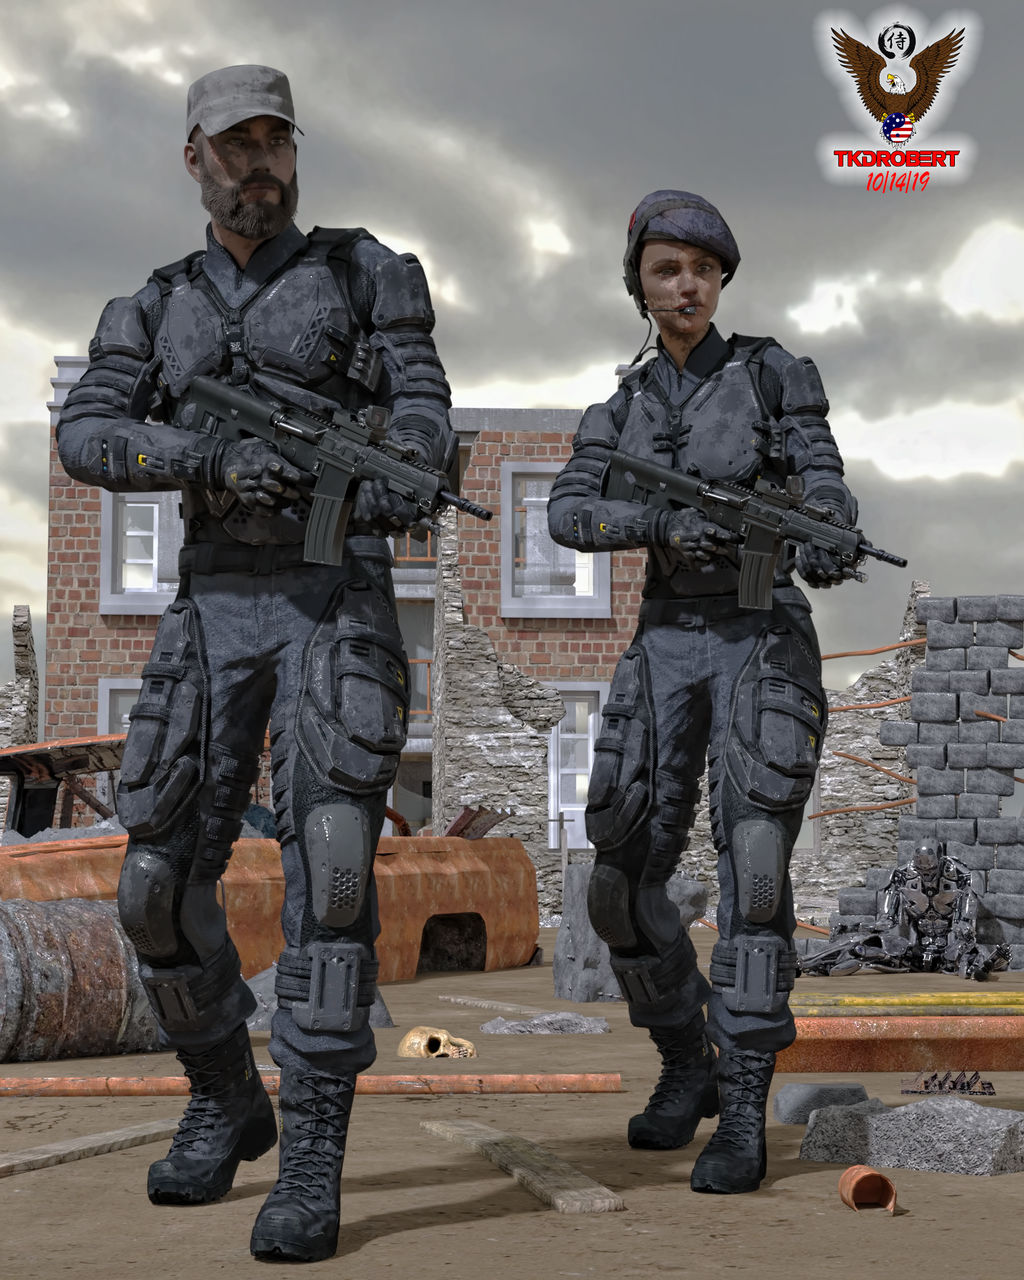 Terminator: Resistance Fighters by tkdrobert